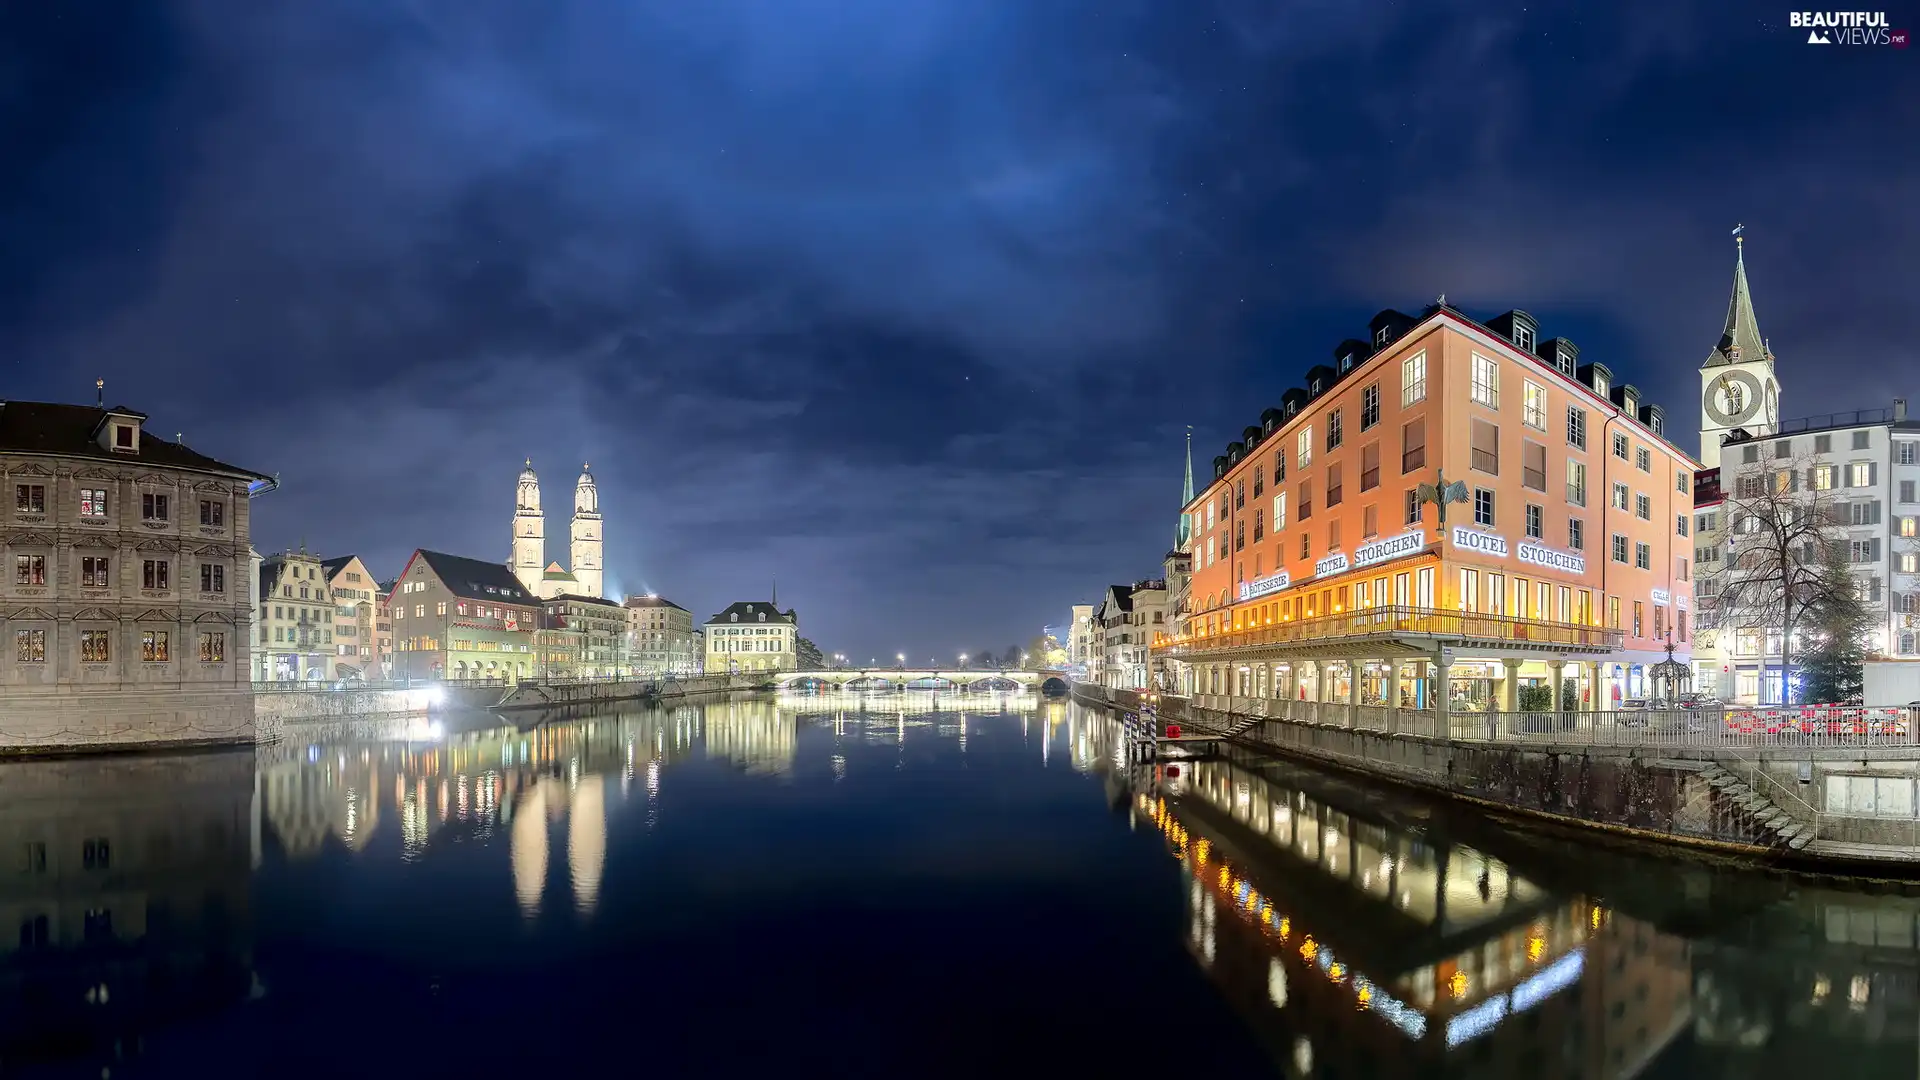 illuminated, Zurich, Night, bridge, River Limmat, buildings, Switzerland